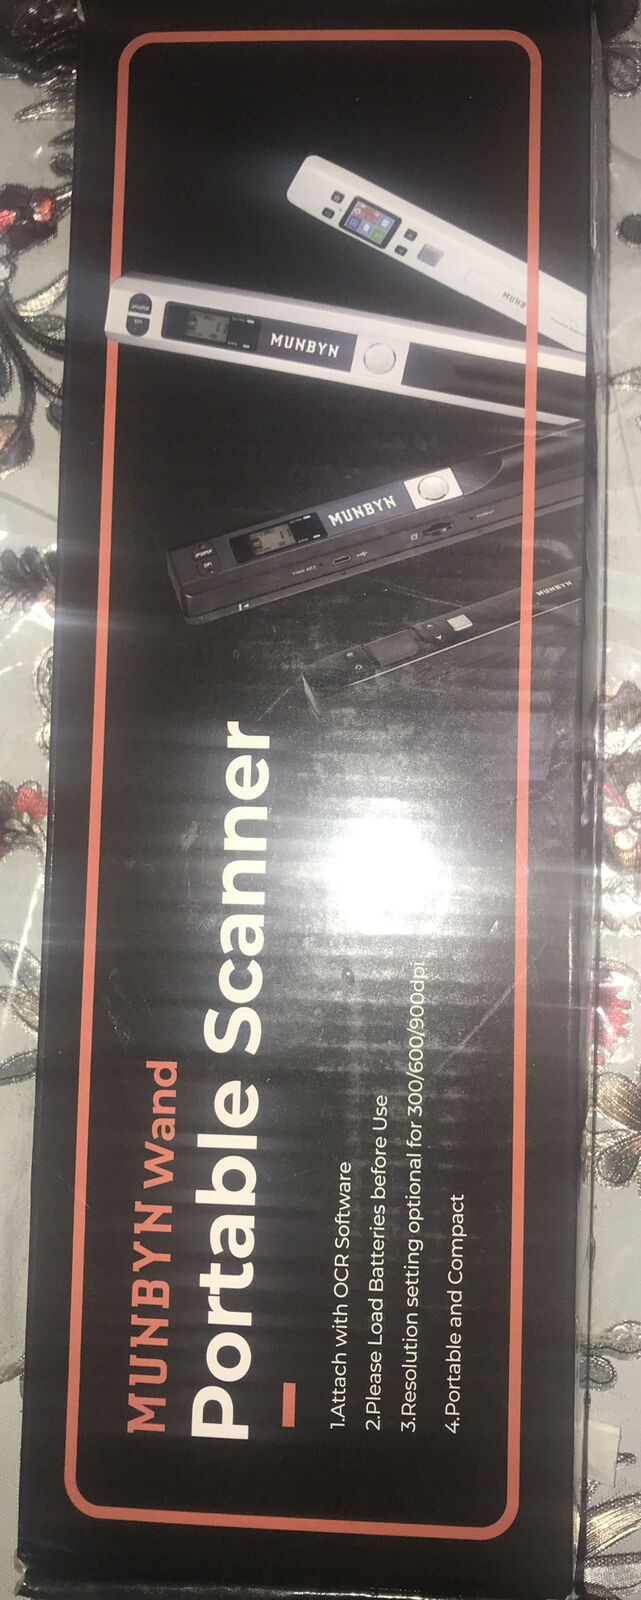 Munbyn Wand Portable Scanner MU-IDS001-Bk Open Box Black. 900dpi.